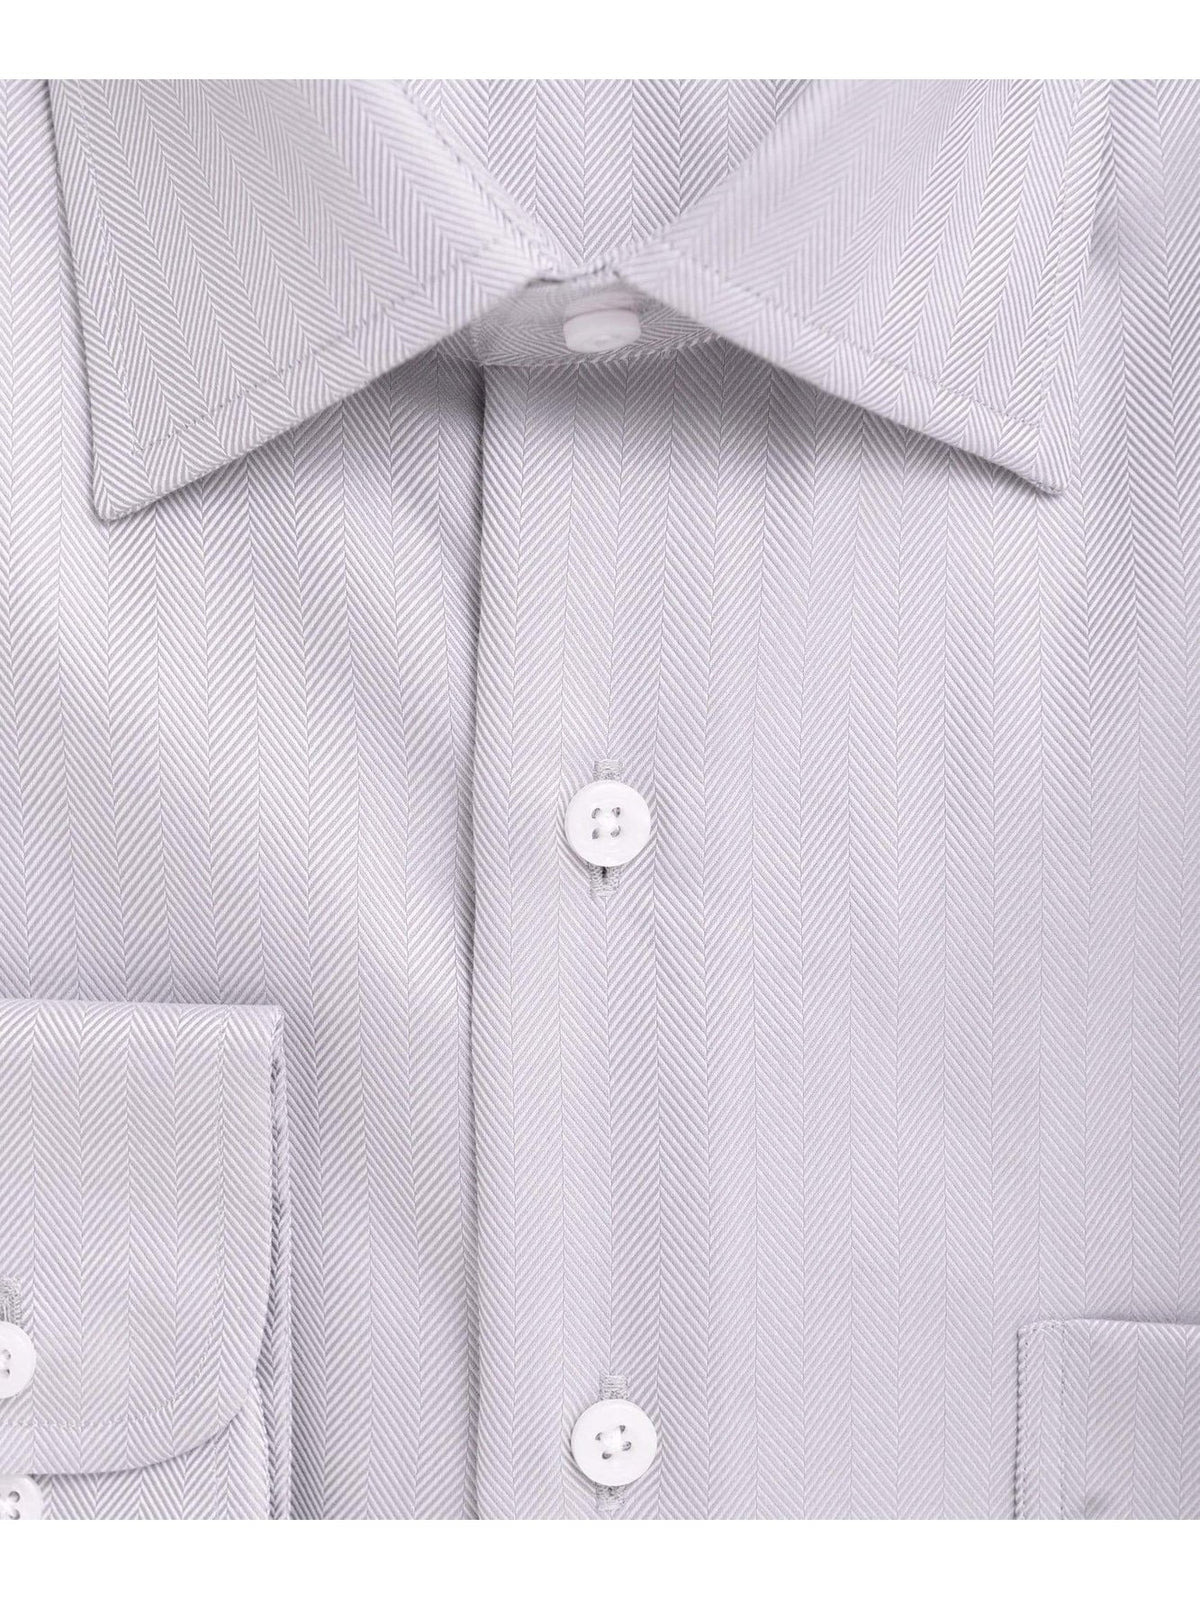 Proper Shirtings SHIRTS Mens Classic Fit Gray Herringbone Spread Collar 100 2 Ply Cotton Dress Shirt